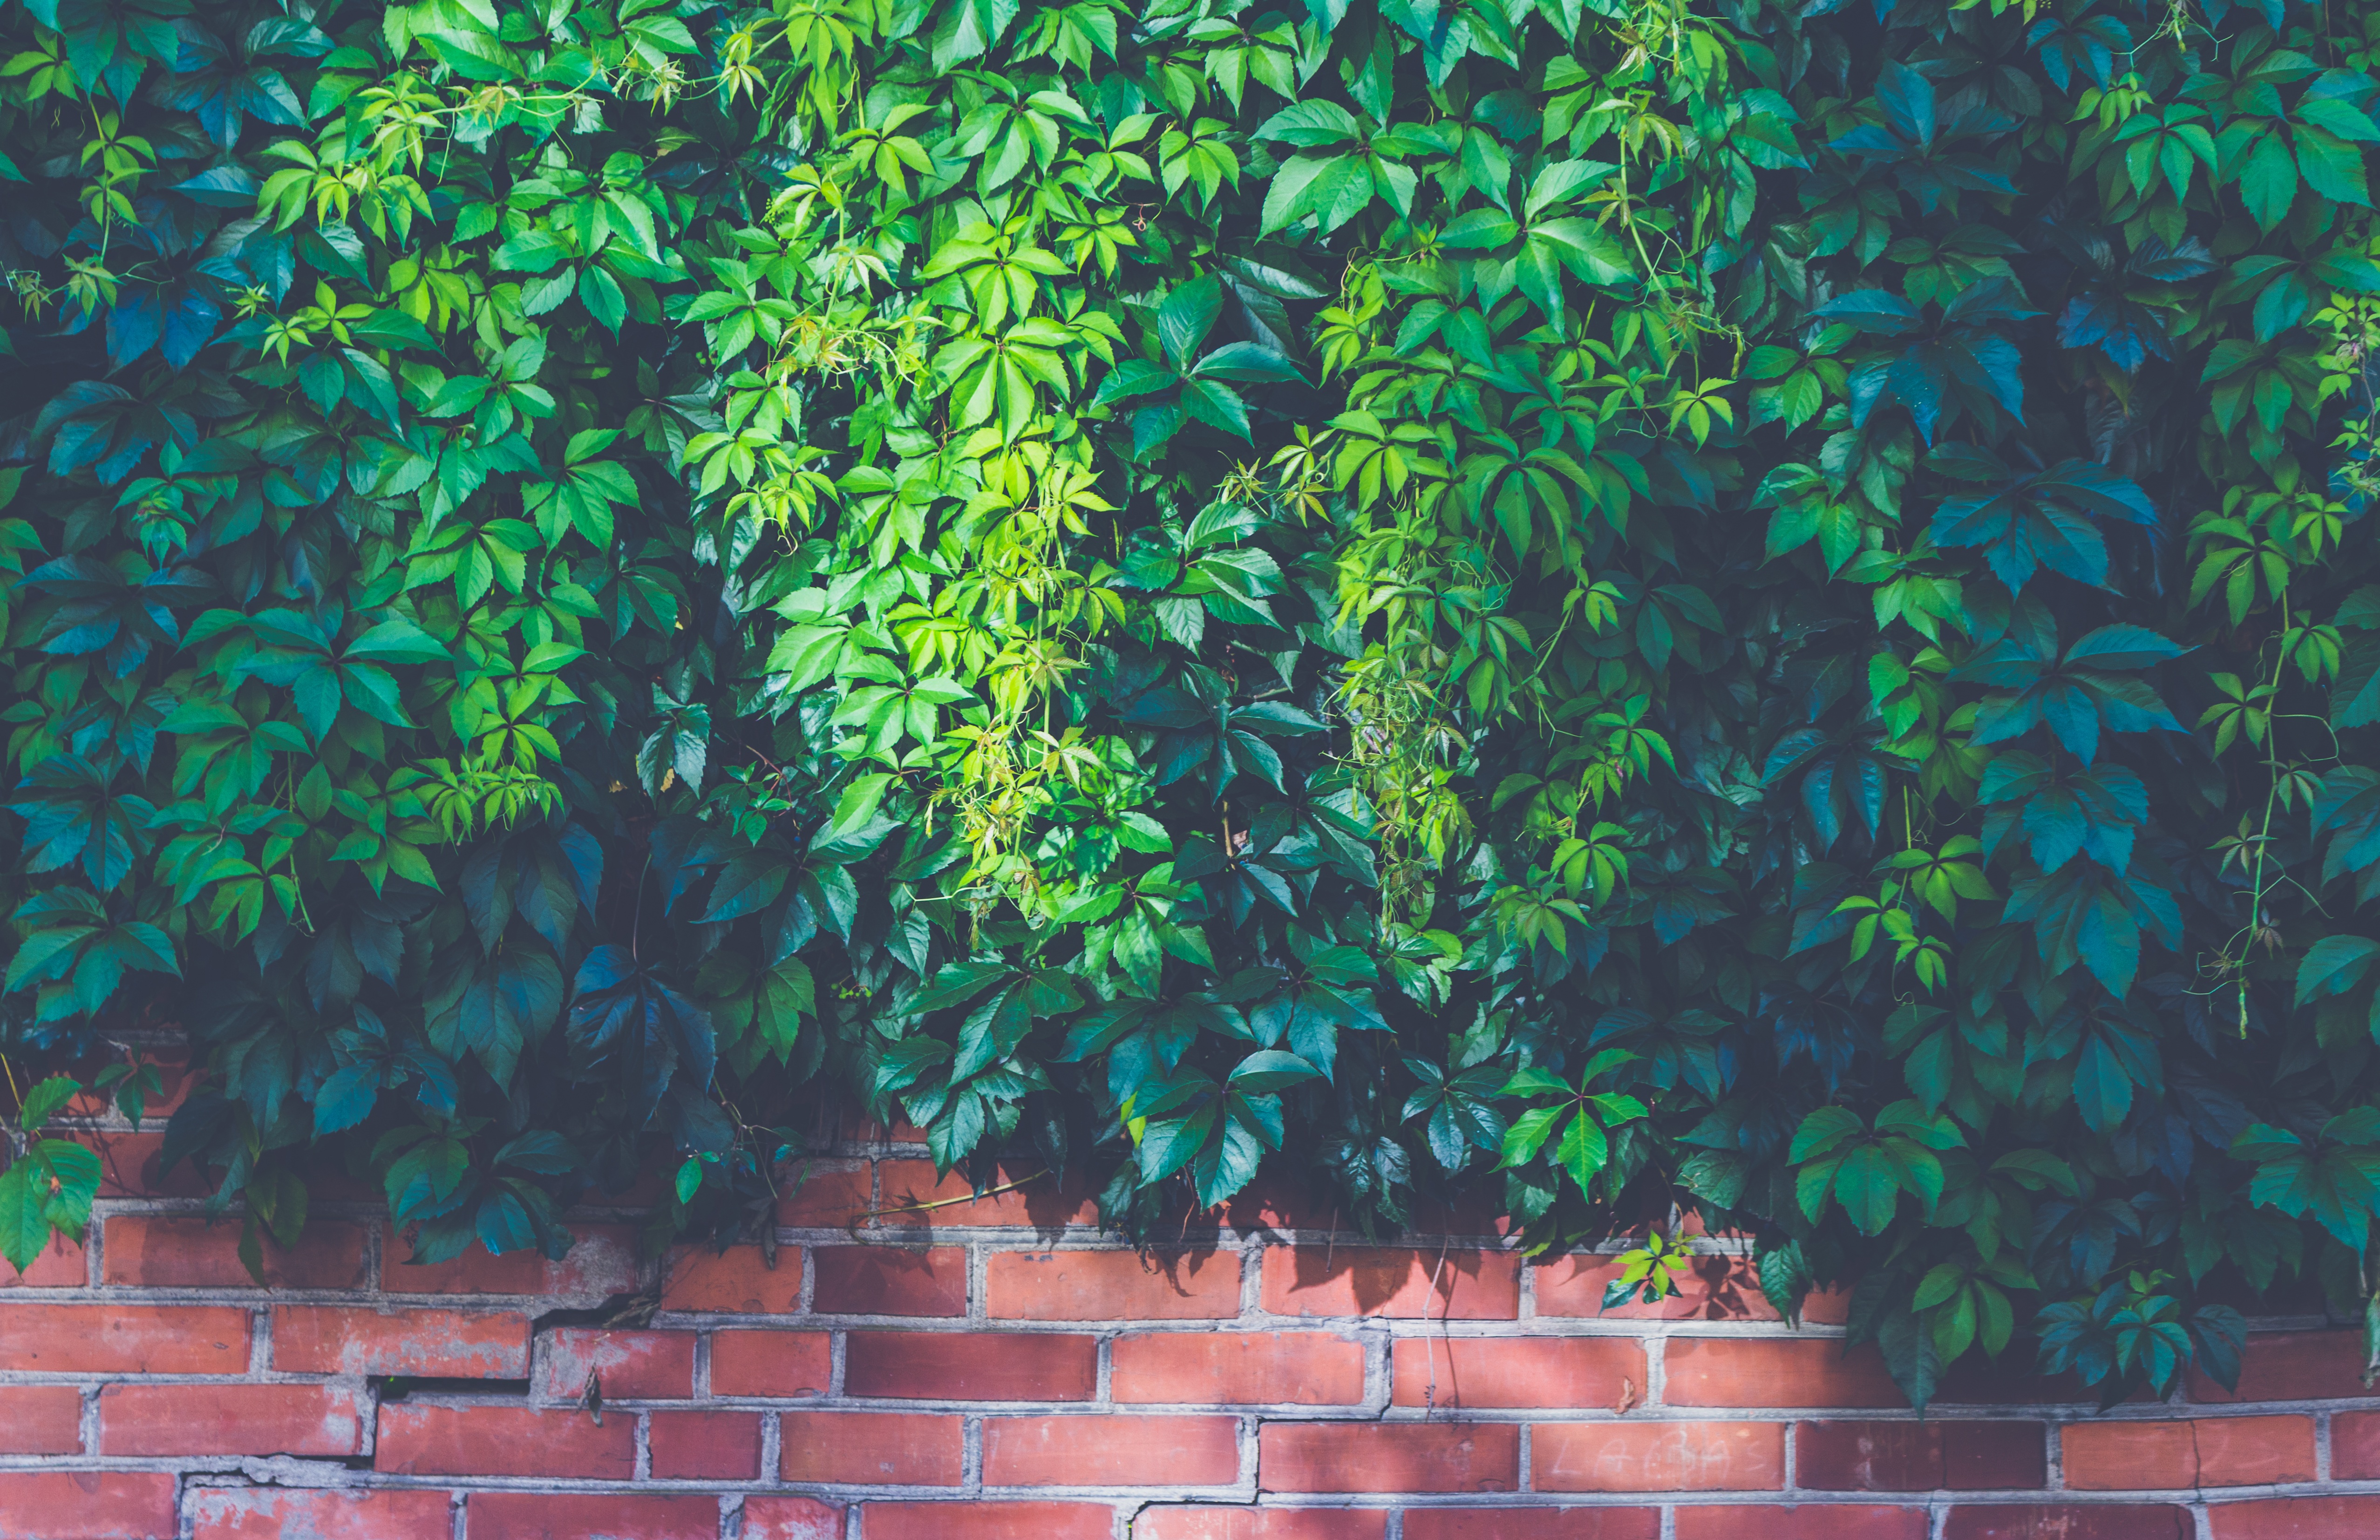 Green vegetation on a brick wall